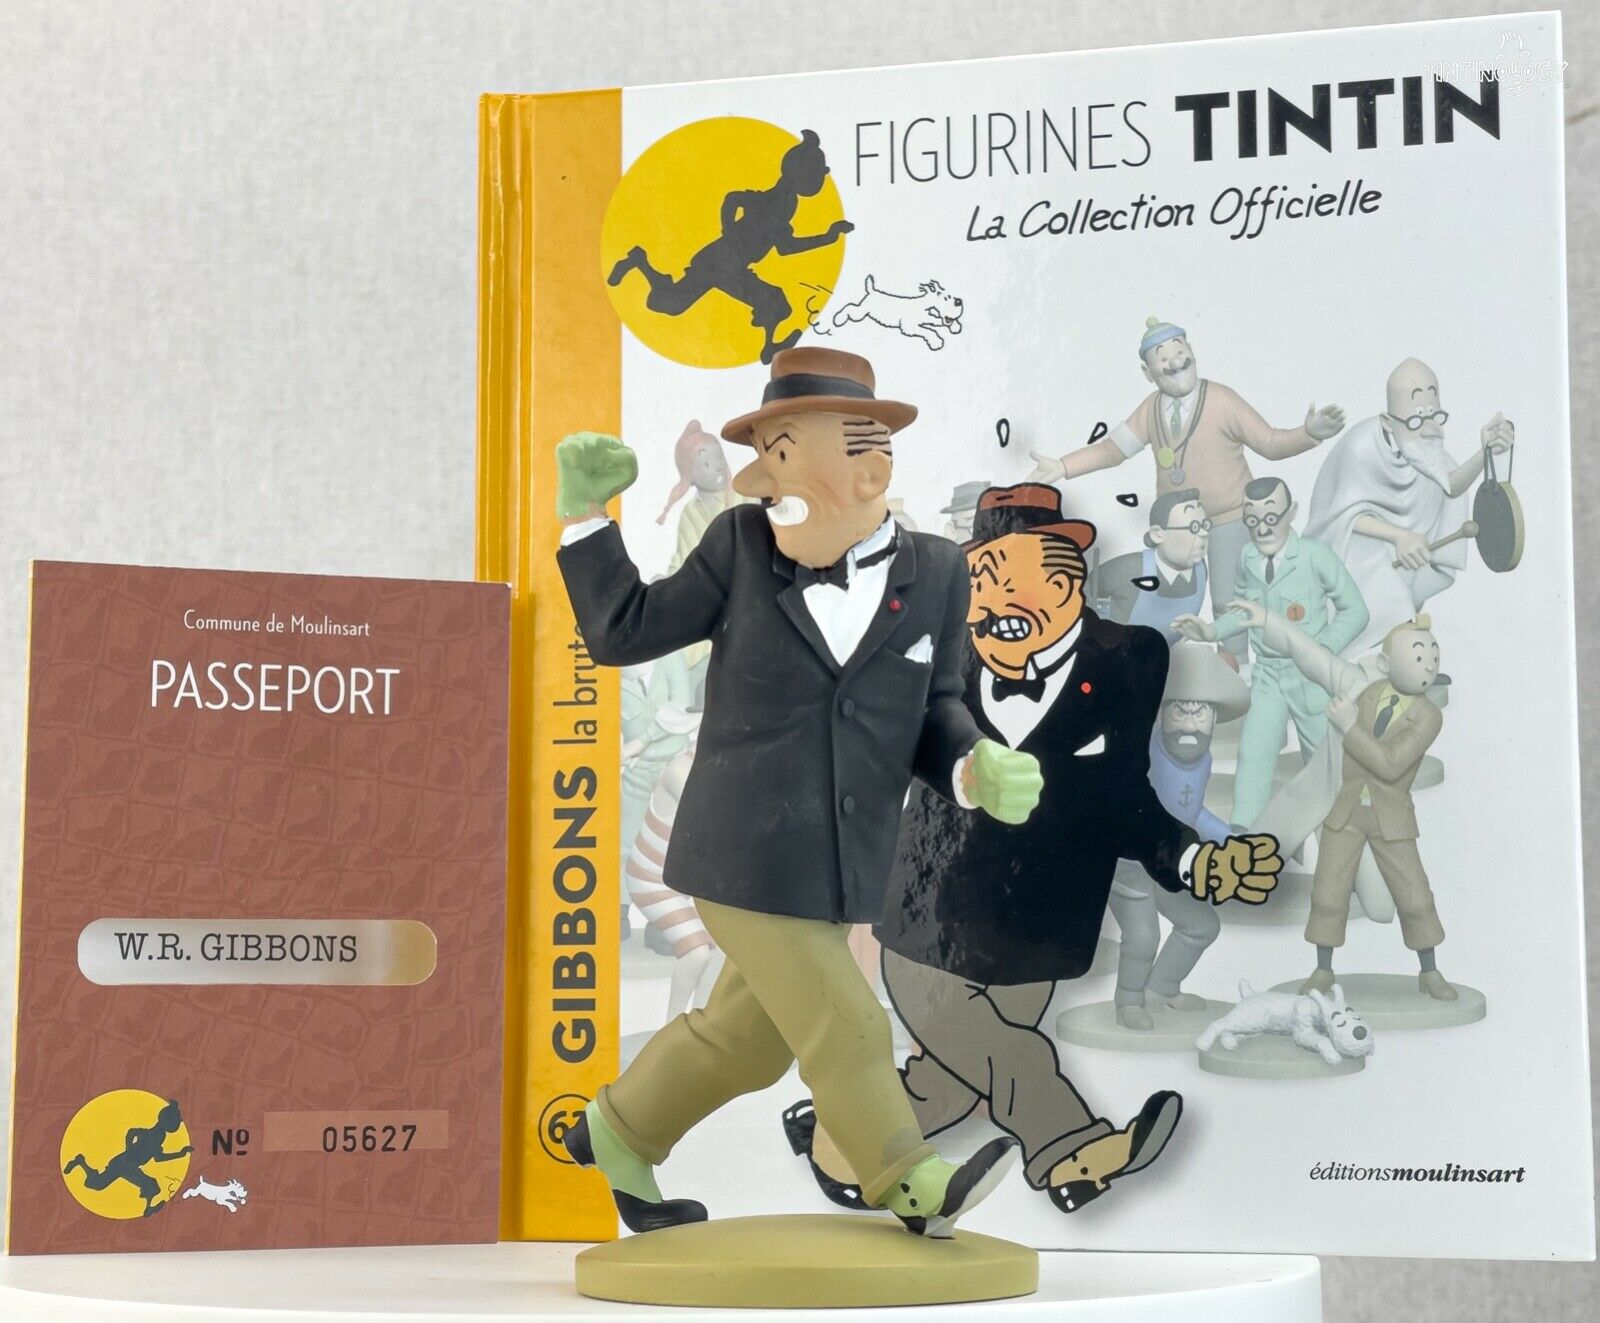 Tintin Figurines Officielle 58 Laszlo Carriedas: Flight 714 Model ML Resin  Figure -  Denmark